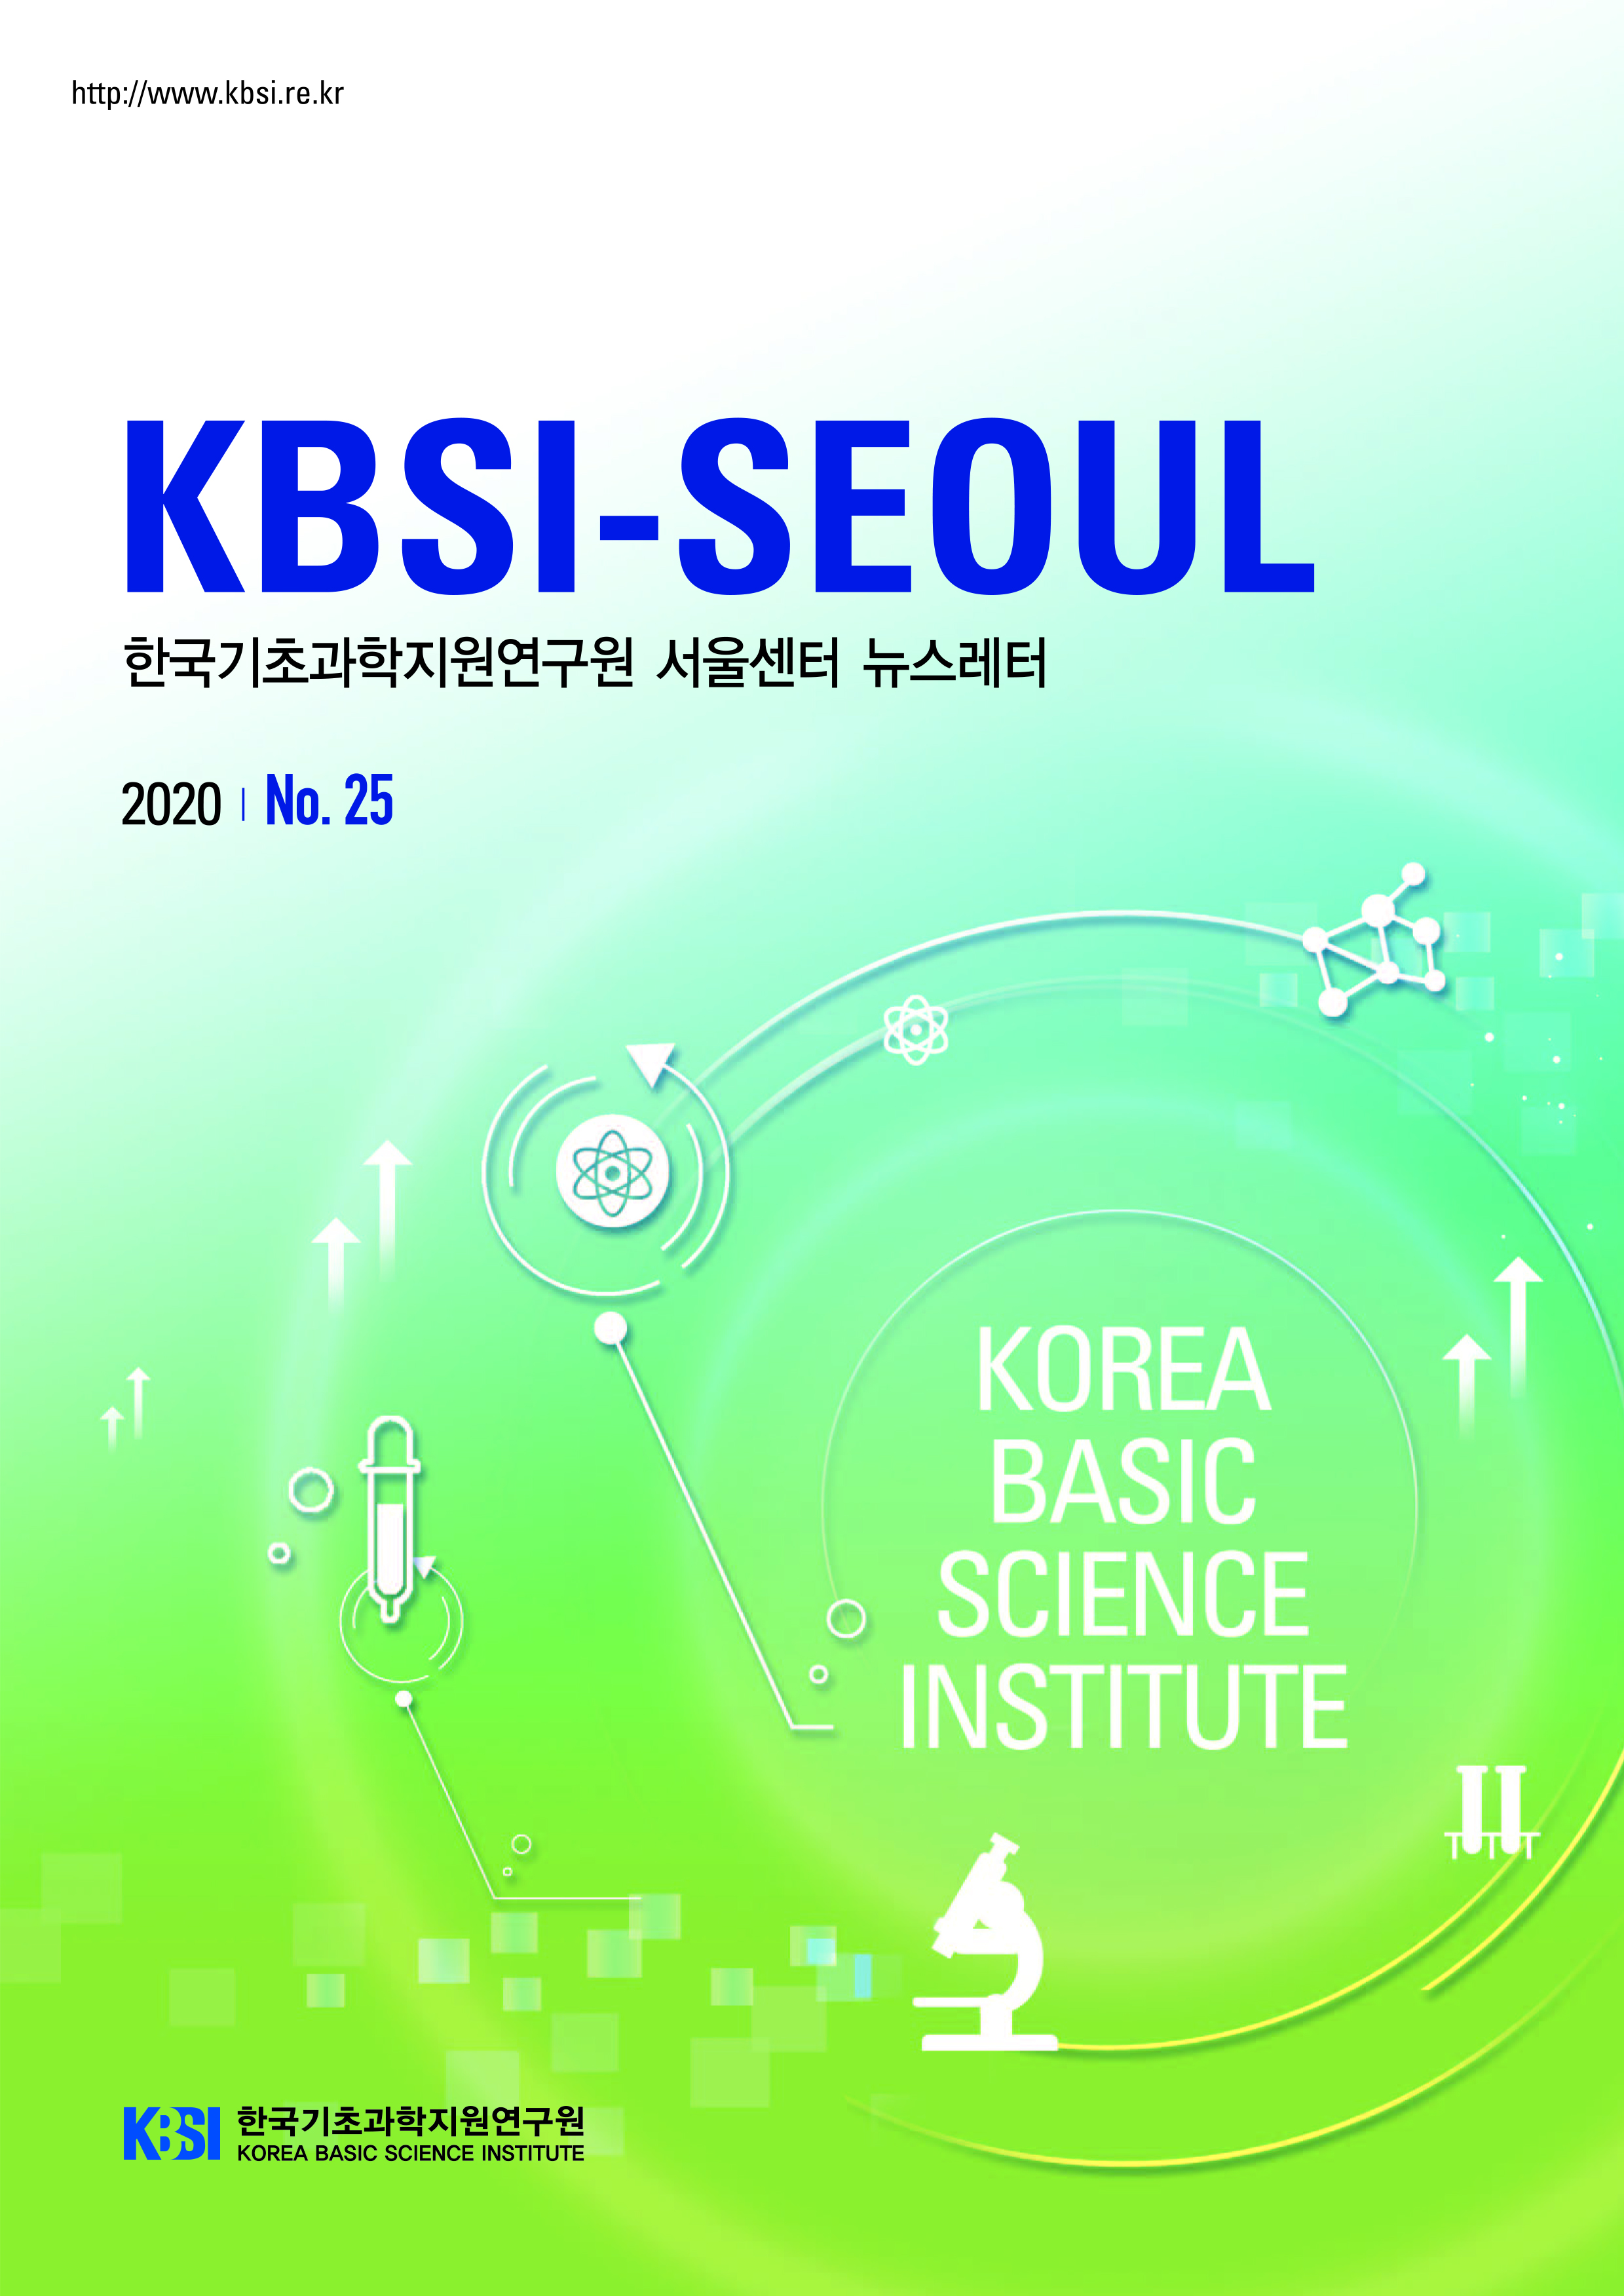 KBSI-SEOUL 한국기초과학지원연구원 서울센터 뉴스레터 2020 No.25 자세한 내용은 첨부파일을 참조하세요